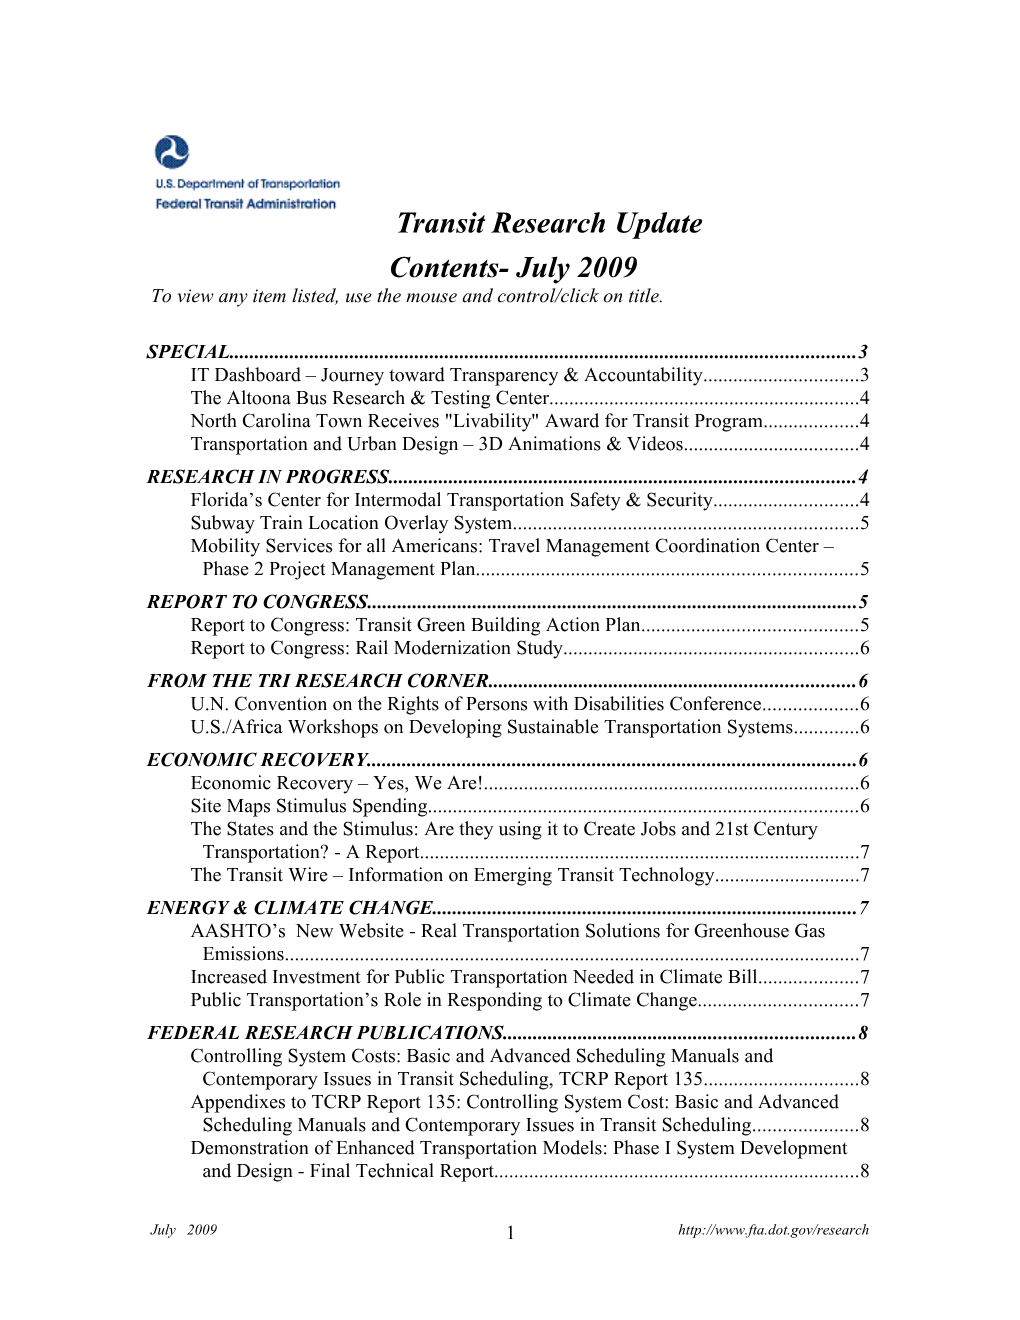 July 2009 Transit Research Update